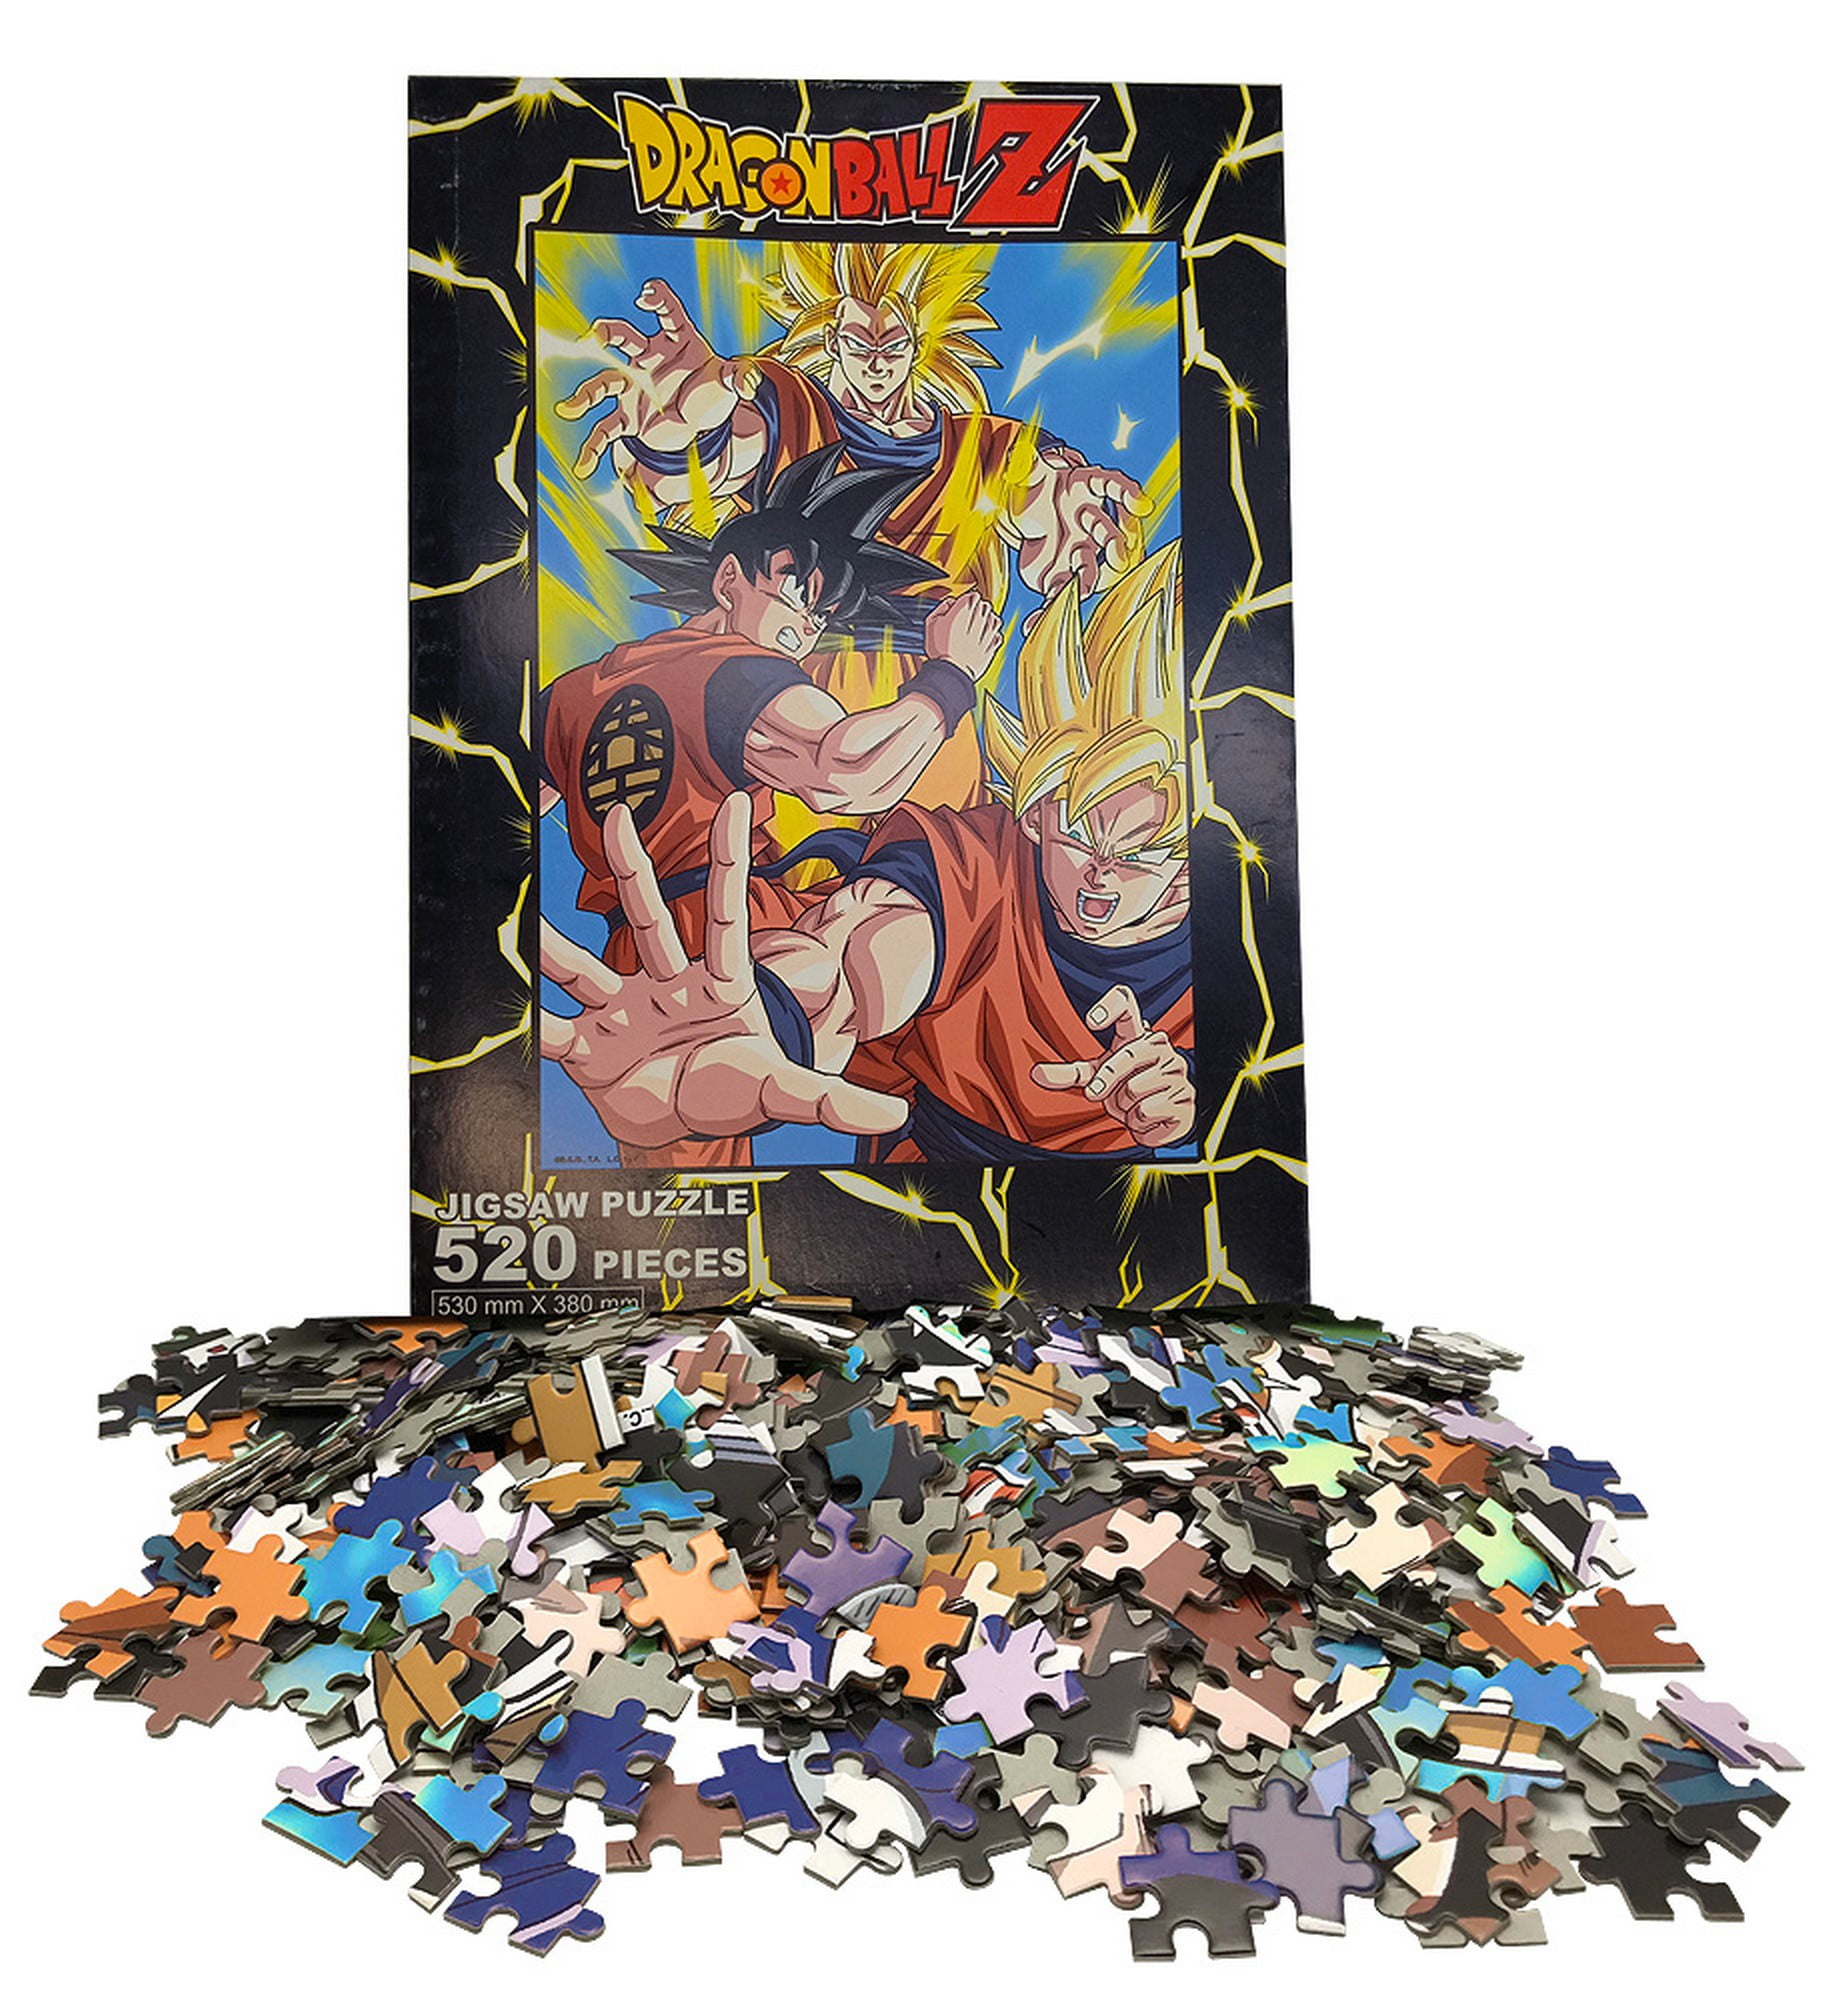 Goku dragon ball super Jigsaw Puzzle by Oscarrios463